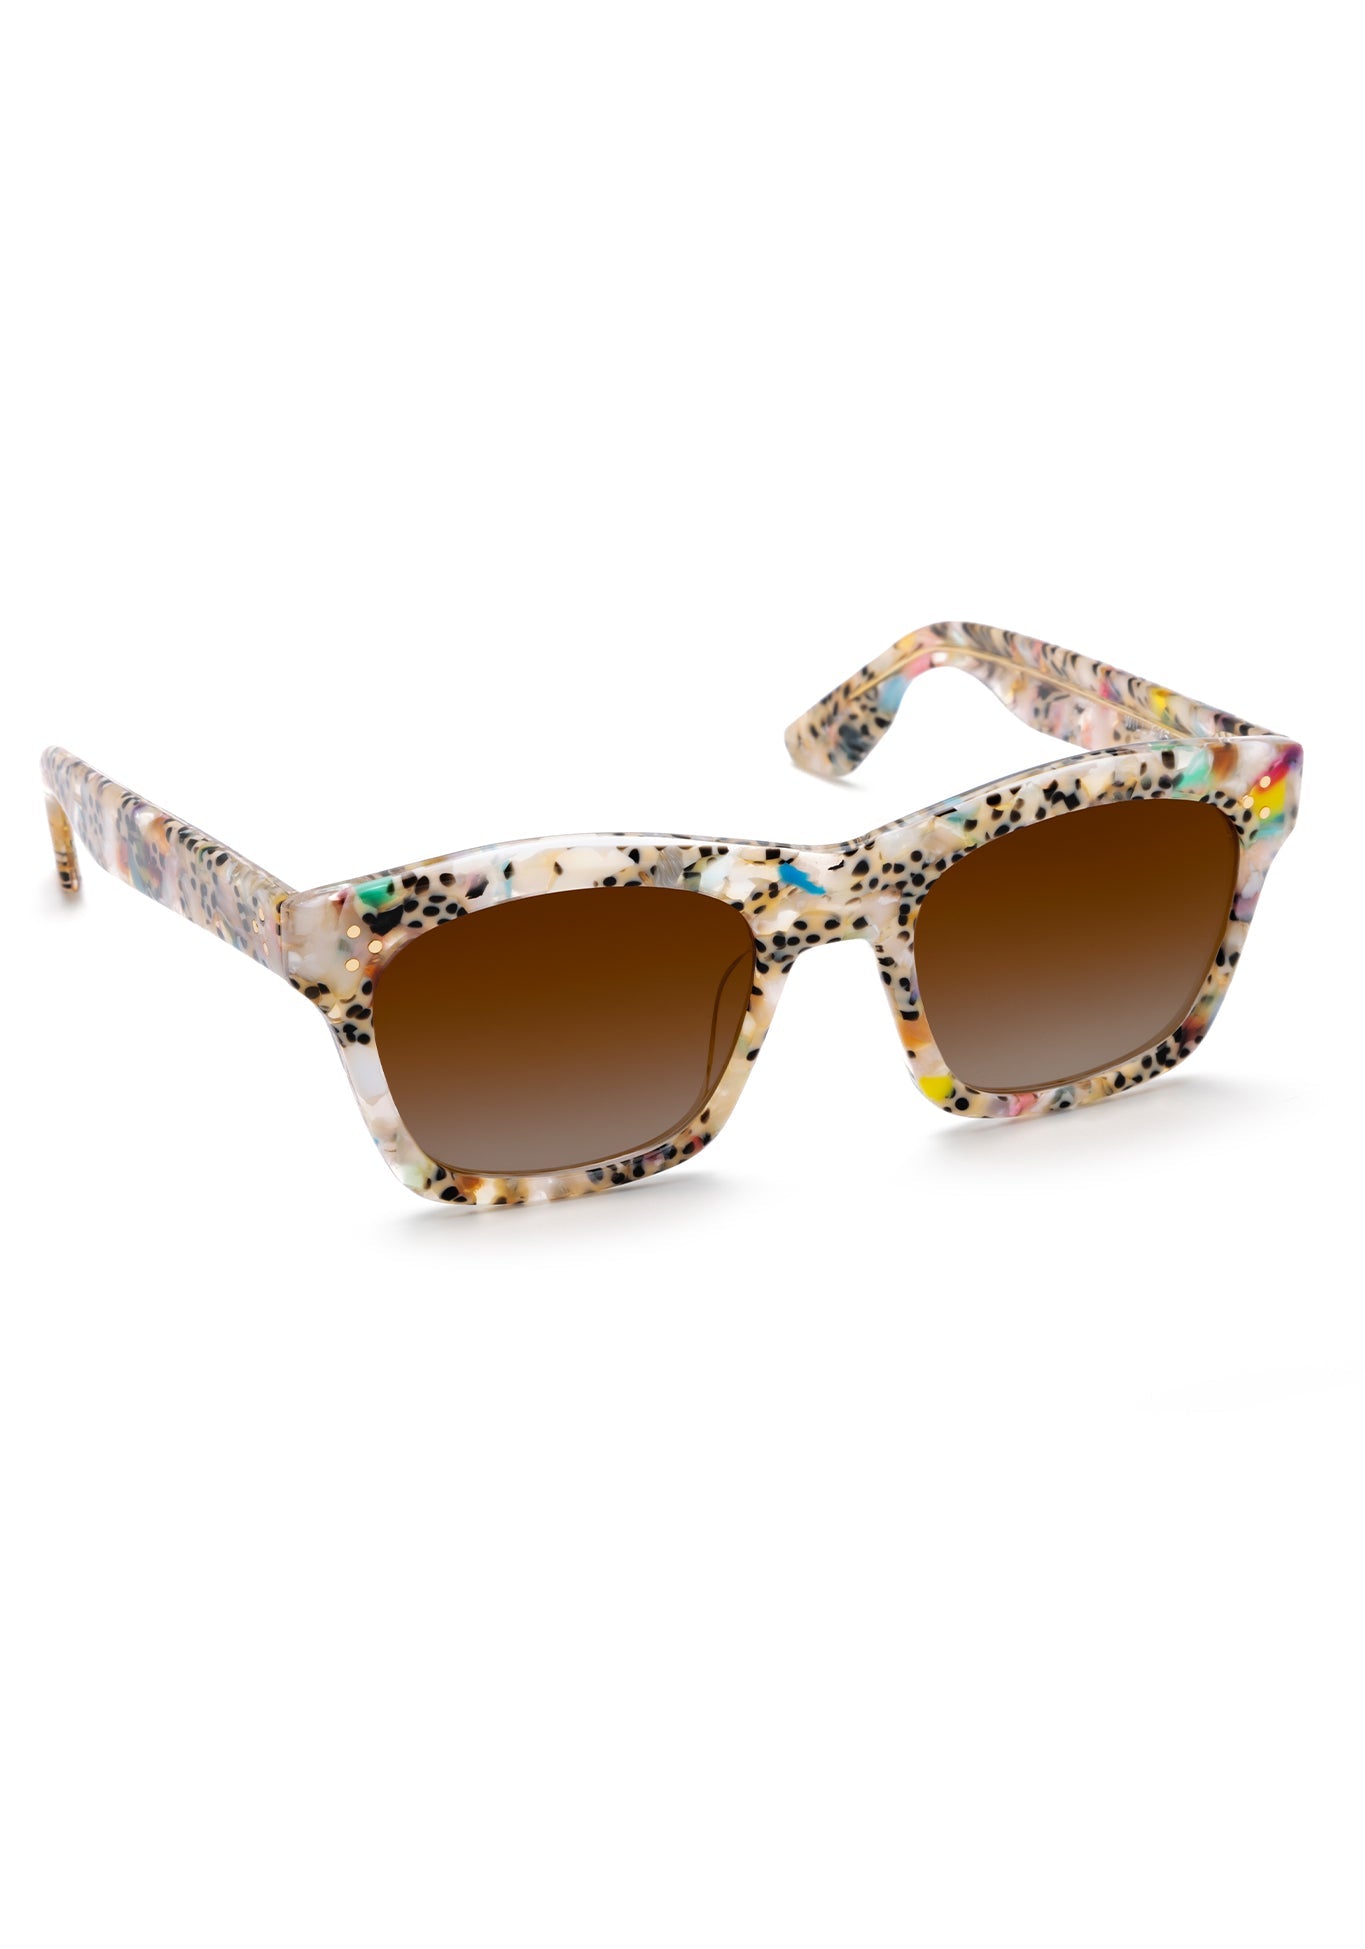 KREWE SUNGLASSES - WILLIAMS | Poppy over Crystal handcrafted, luxury colorful acetate wayfarer sunglasses